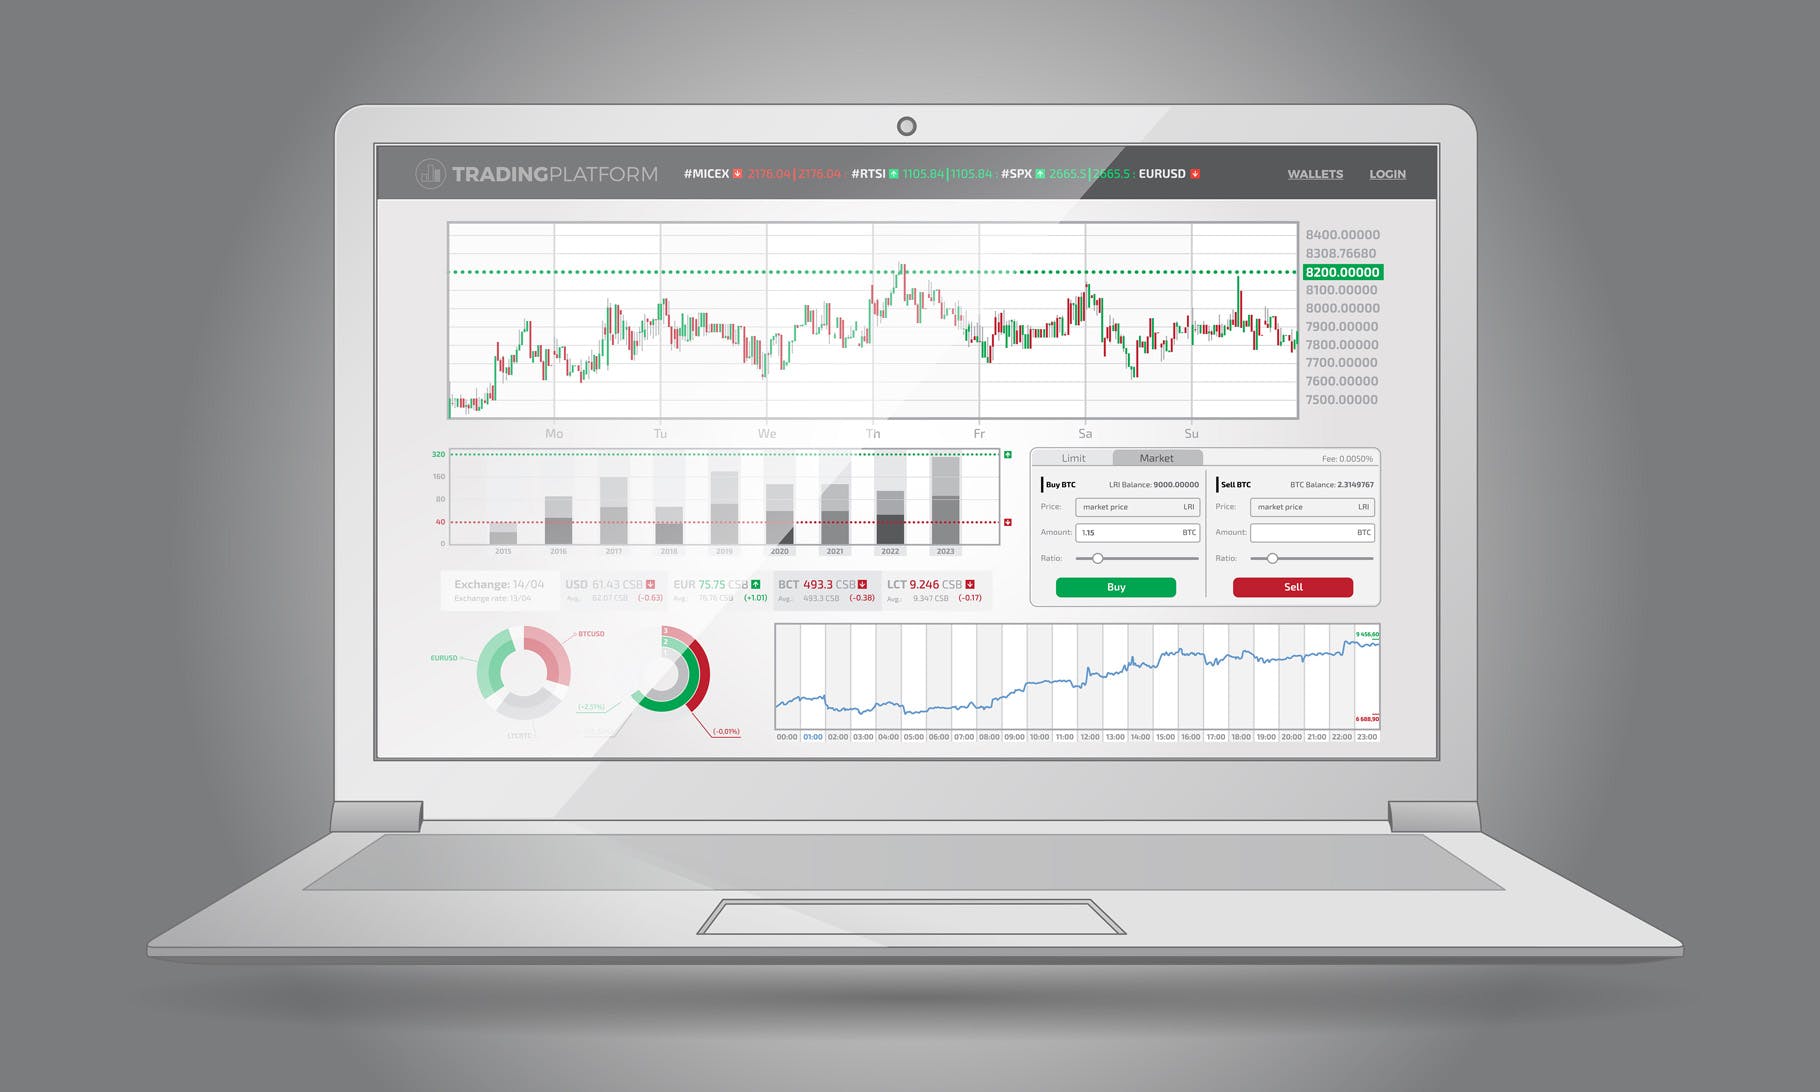 股票交易行情可视化数据图表设计模板 Trading Infographic Elements插图(7)